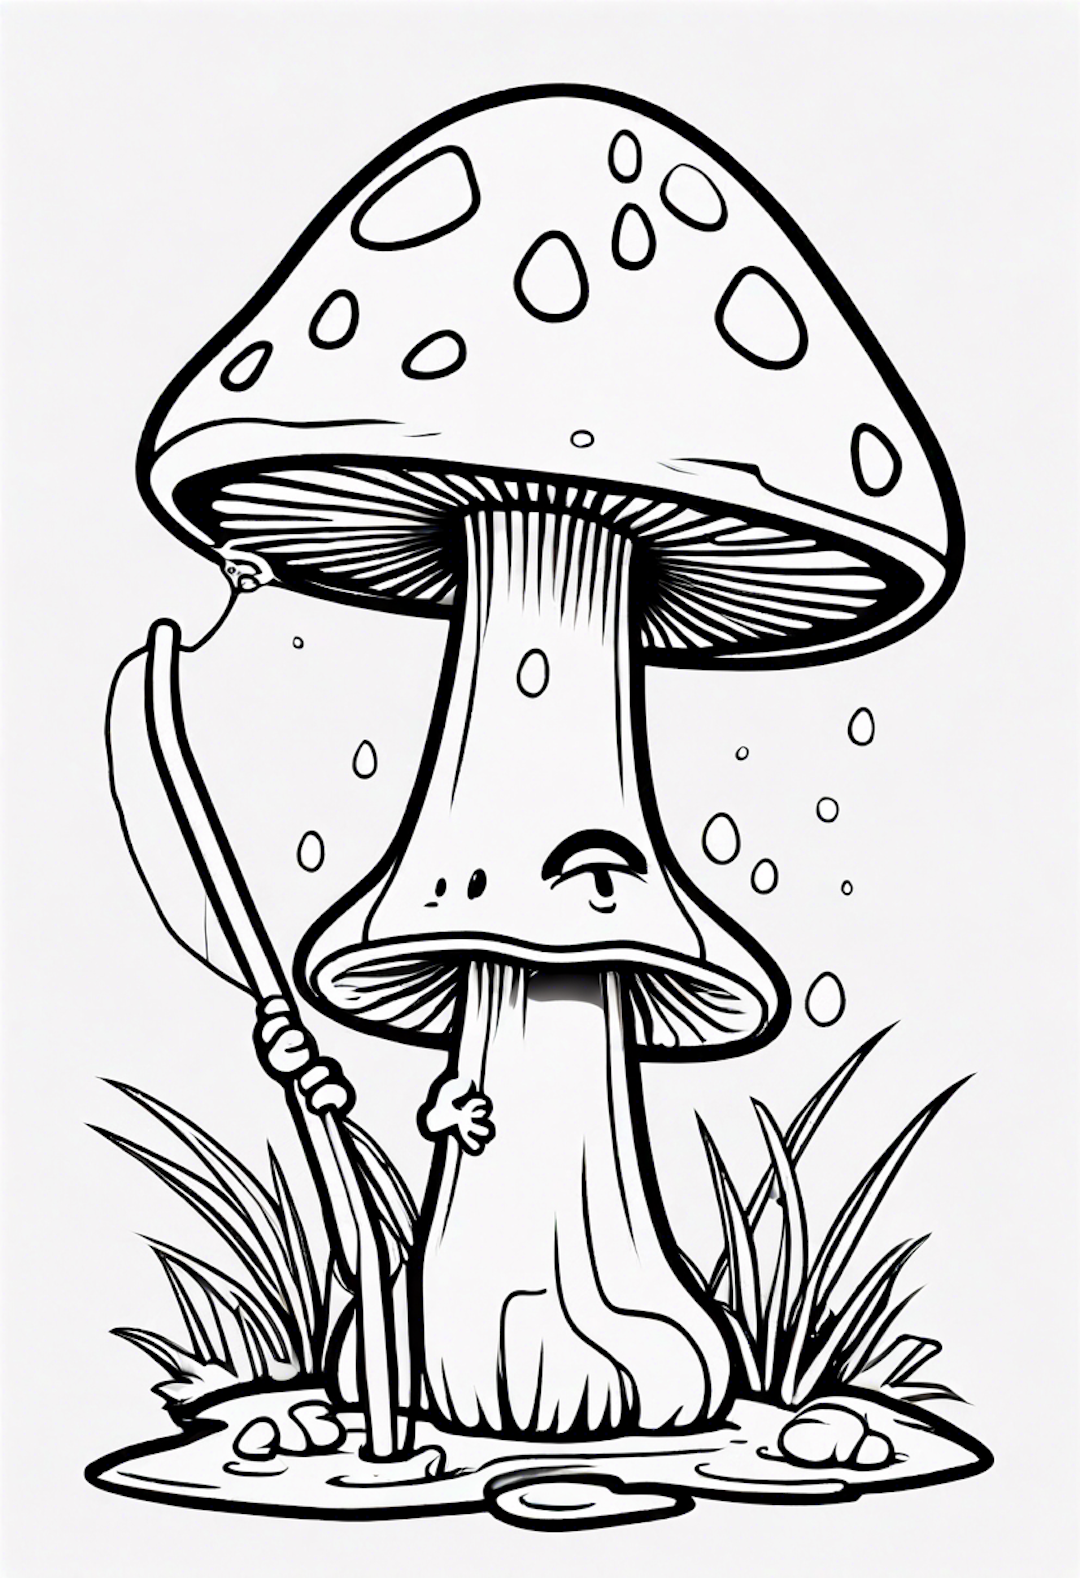 A Cartoon Mushroom Fishing